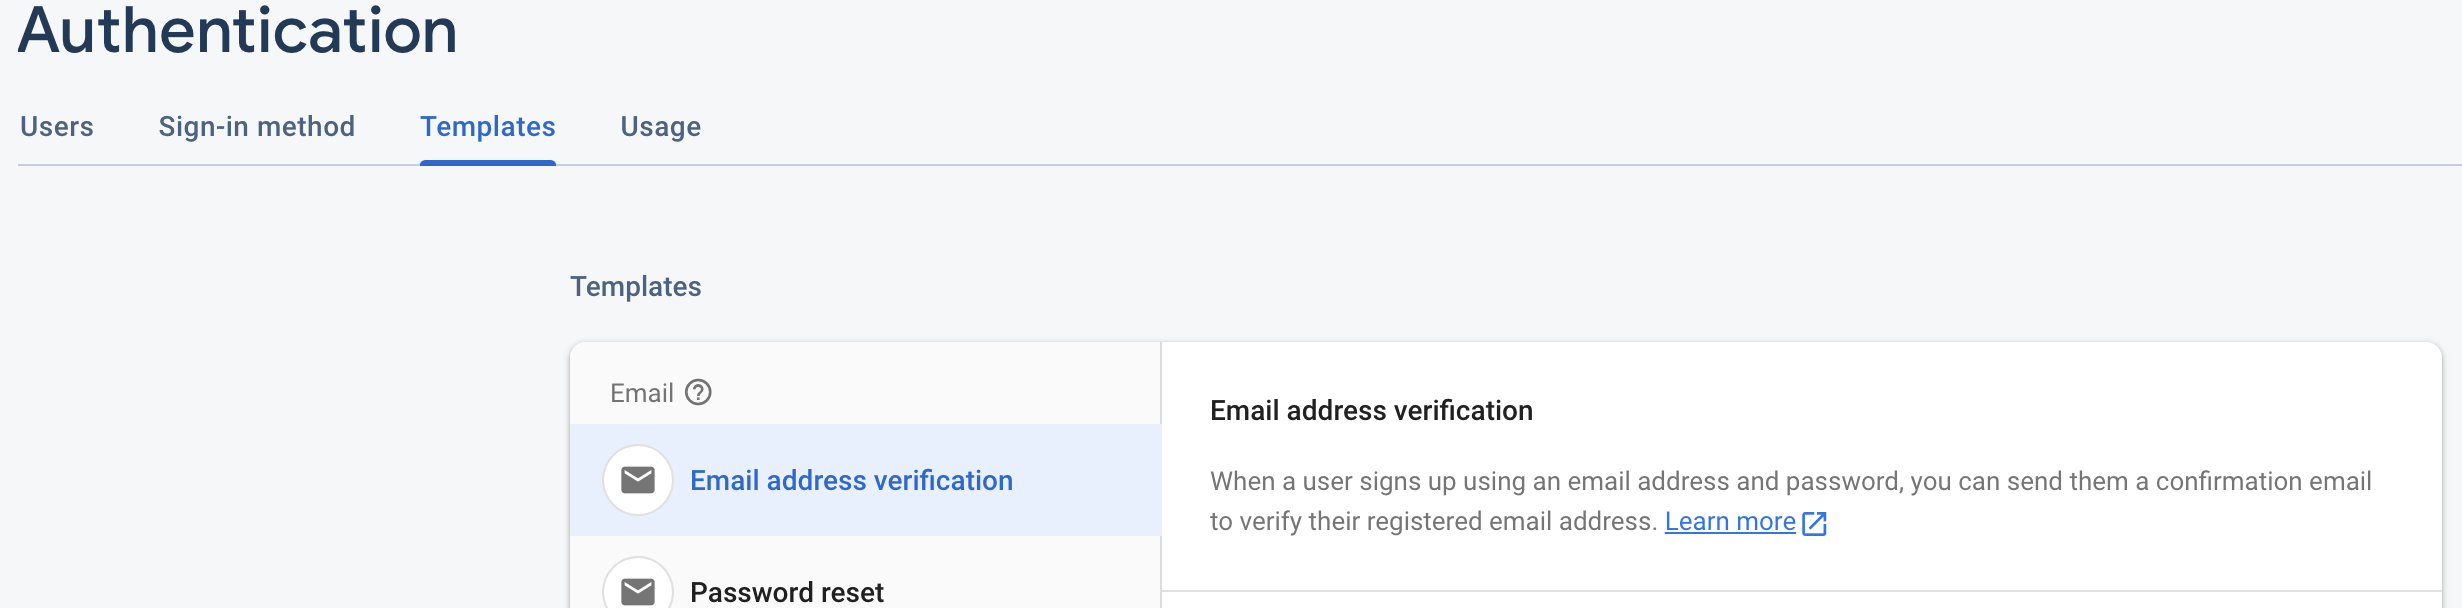 Email Address Verification Settings Form